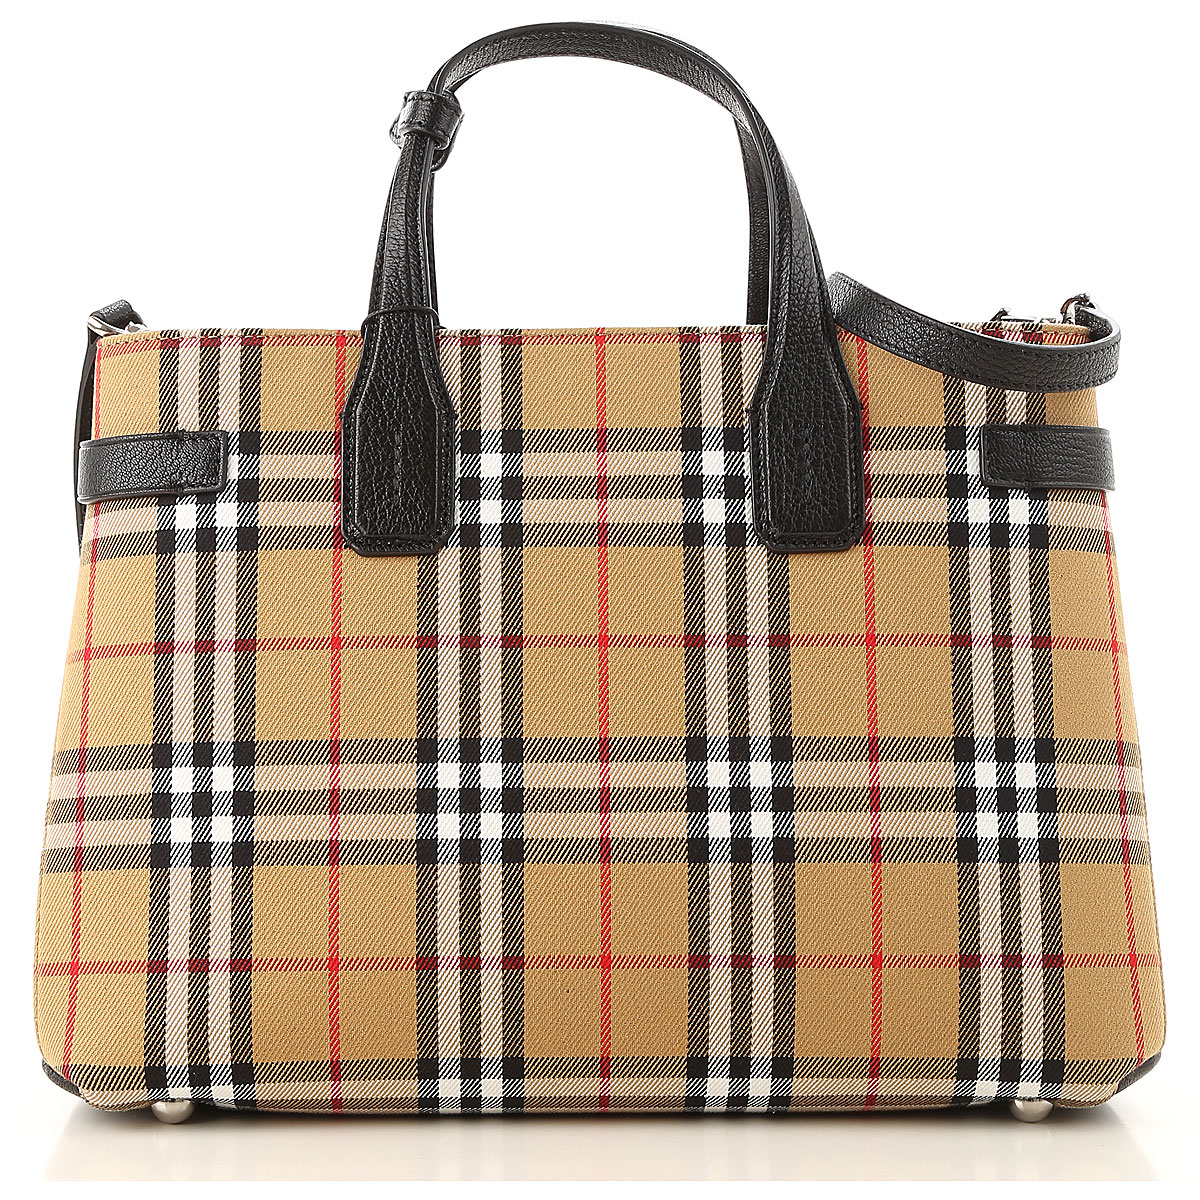 Handbags Burberry, Style code: 4076953-00100-